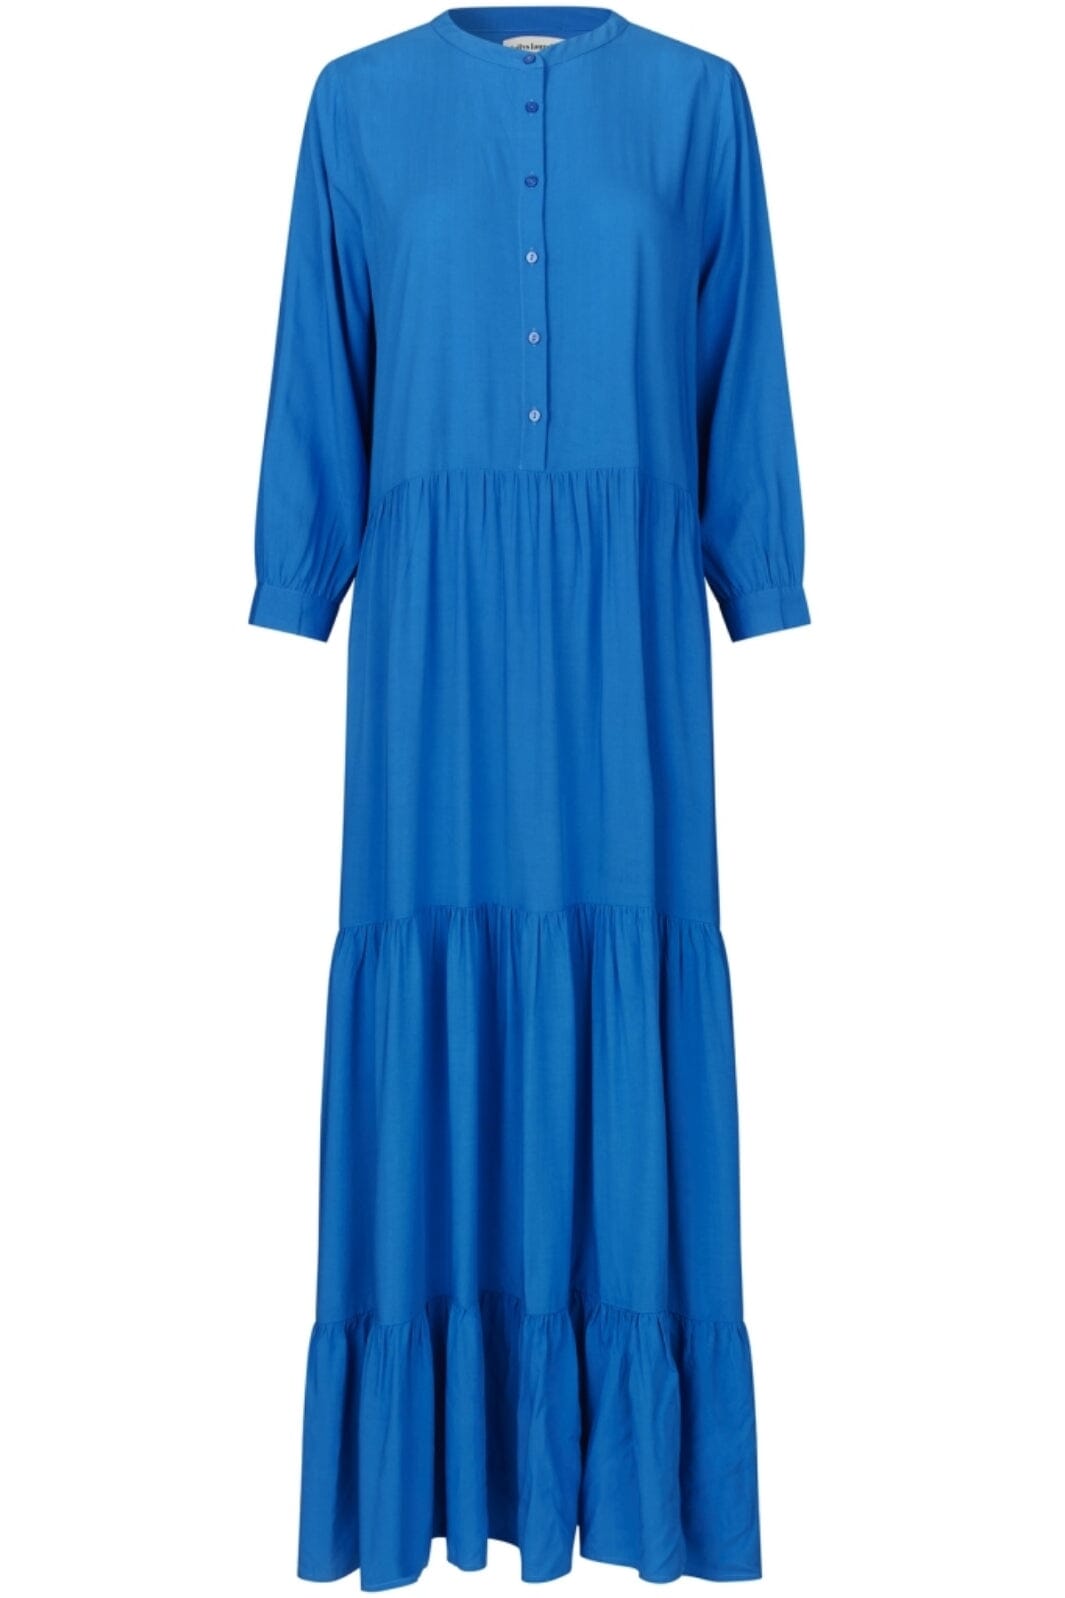 Lollys Laundry - NeeLL Maxi Dress LS 90028-3006 - 20 Blue Kjoler 